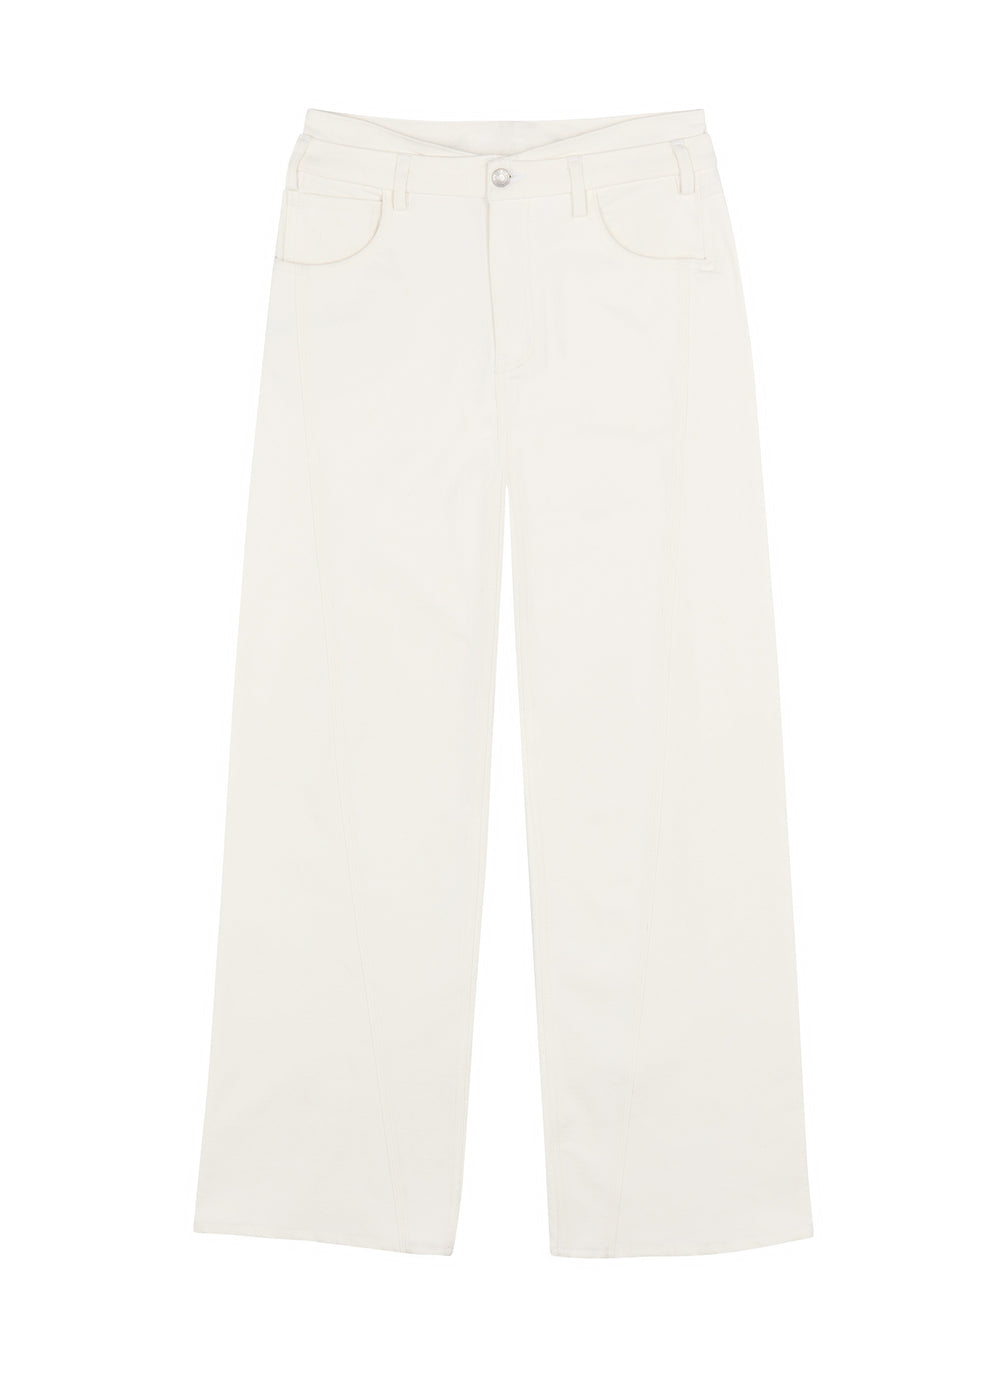 flatlay of white wide leg jeans